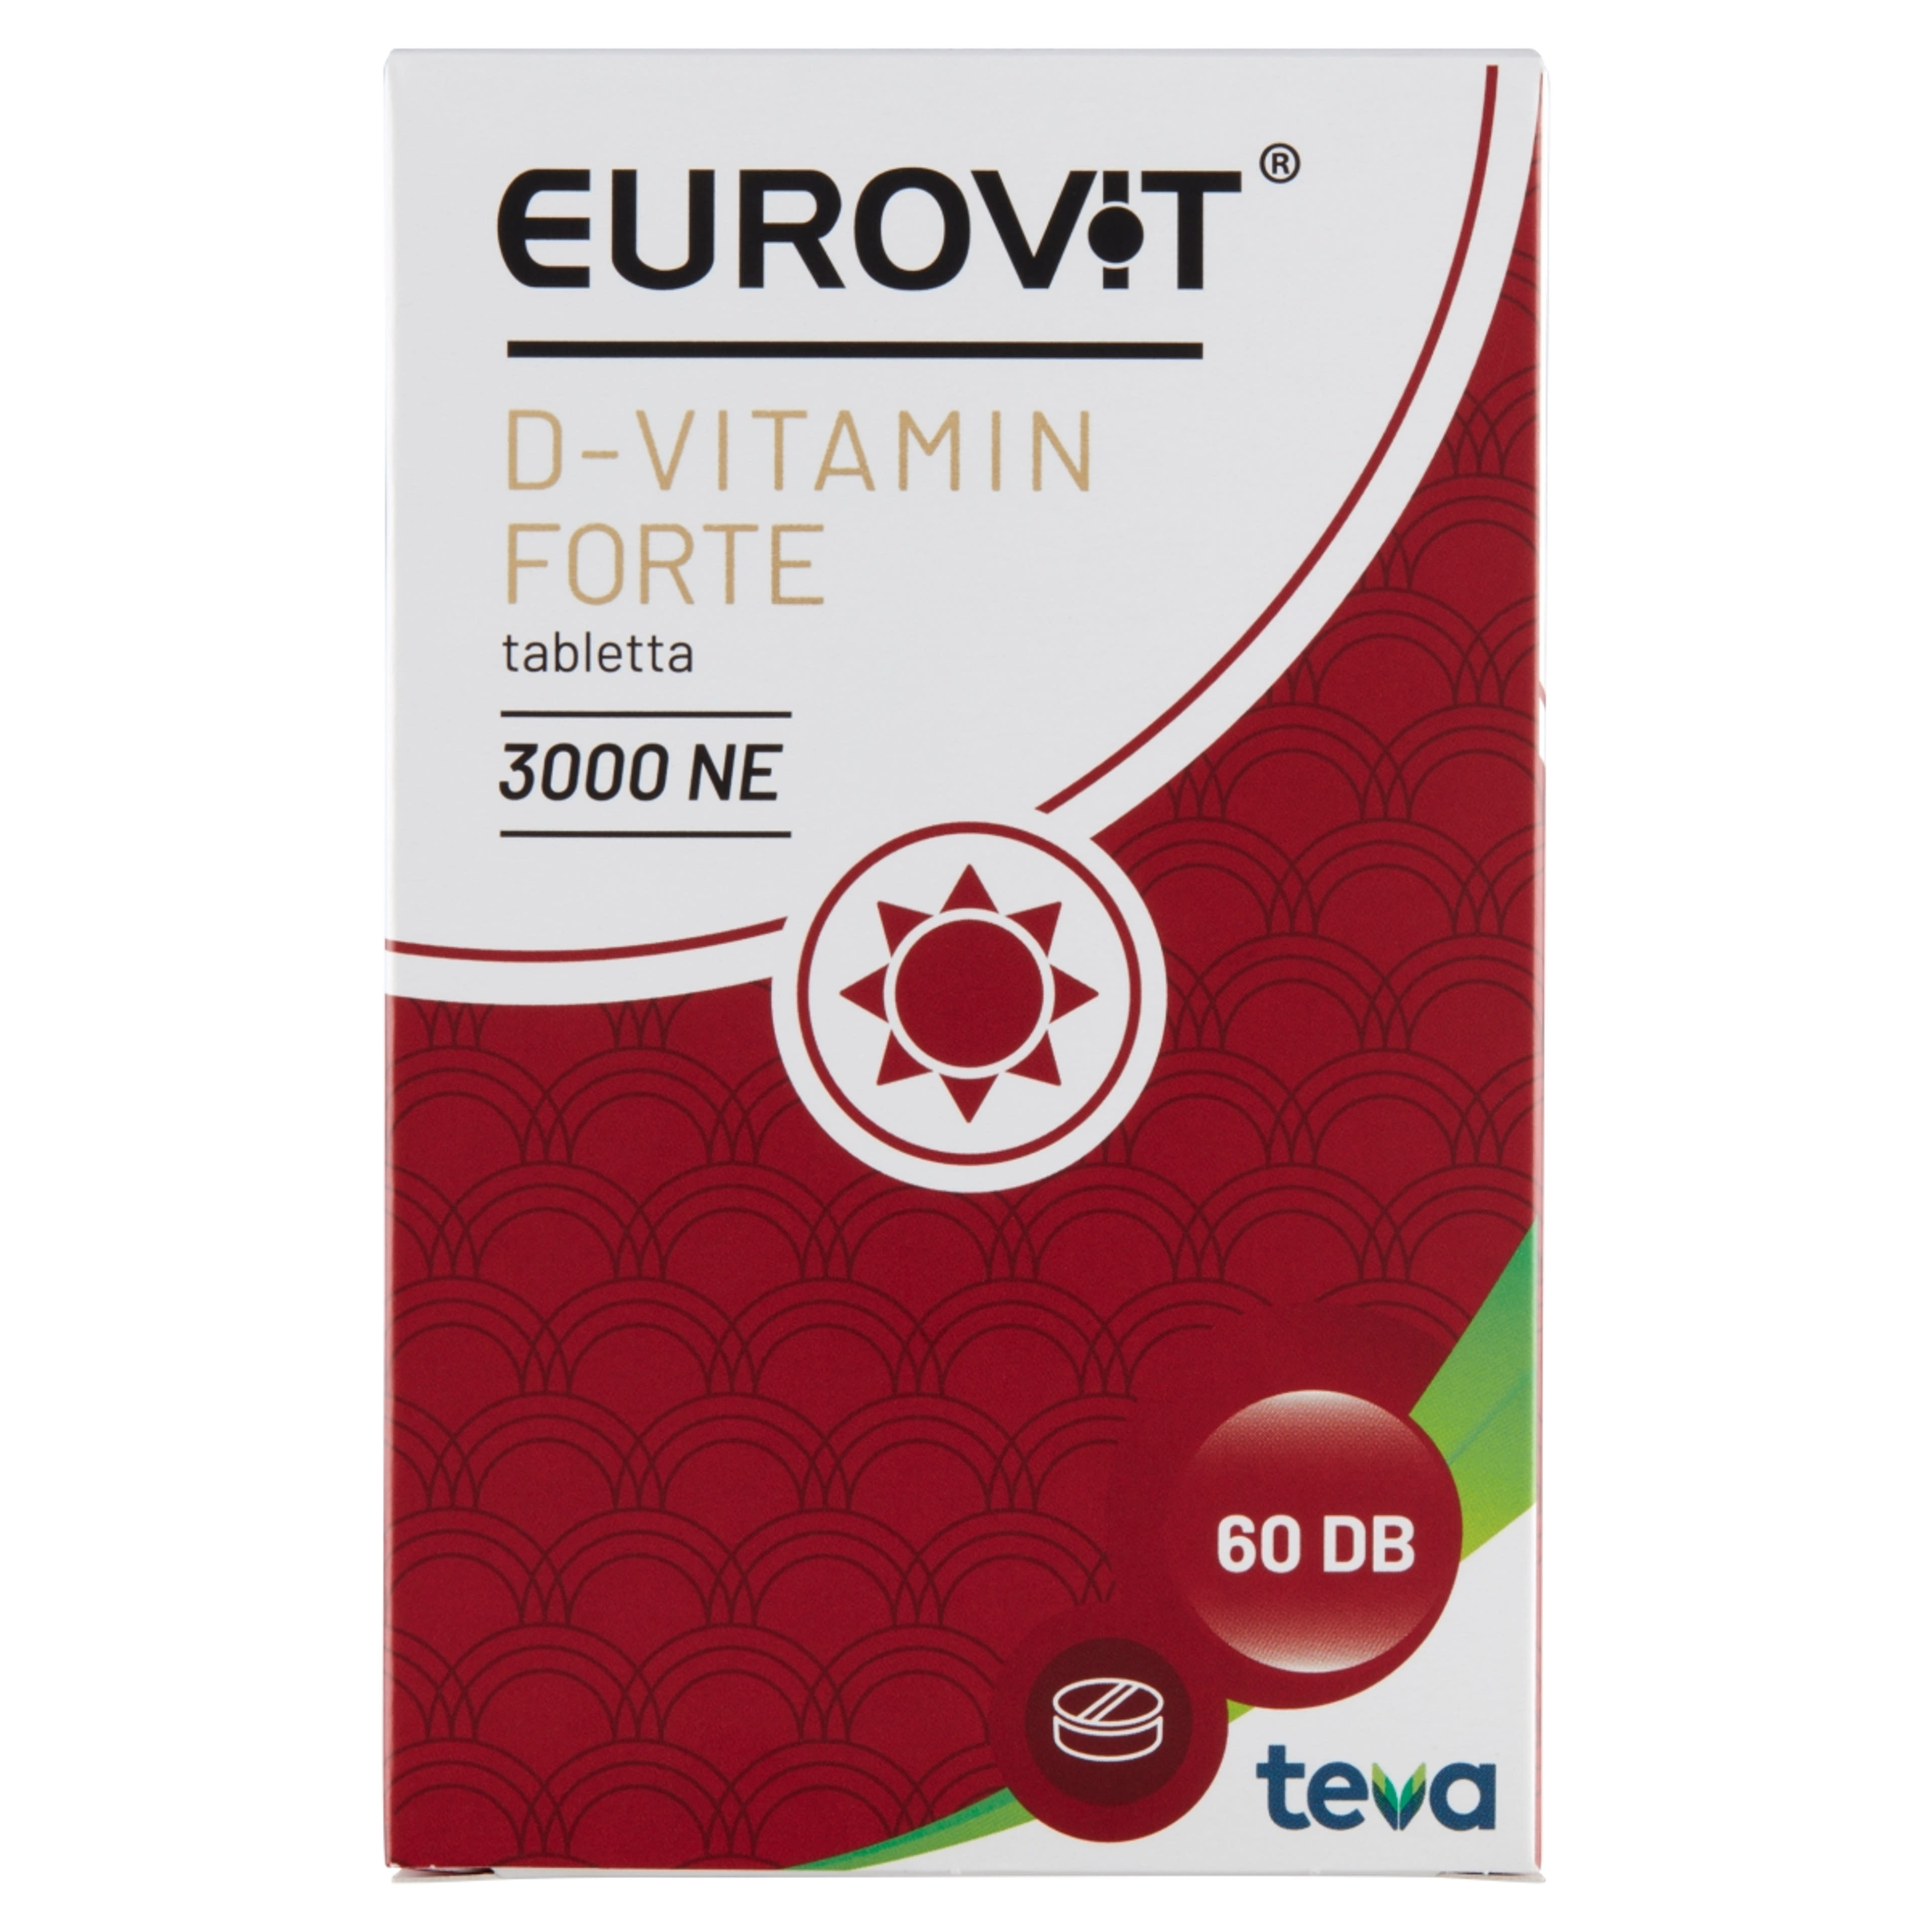 Eurovit D-Vitamin Forte 3000 Ne tabletta - 60 db